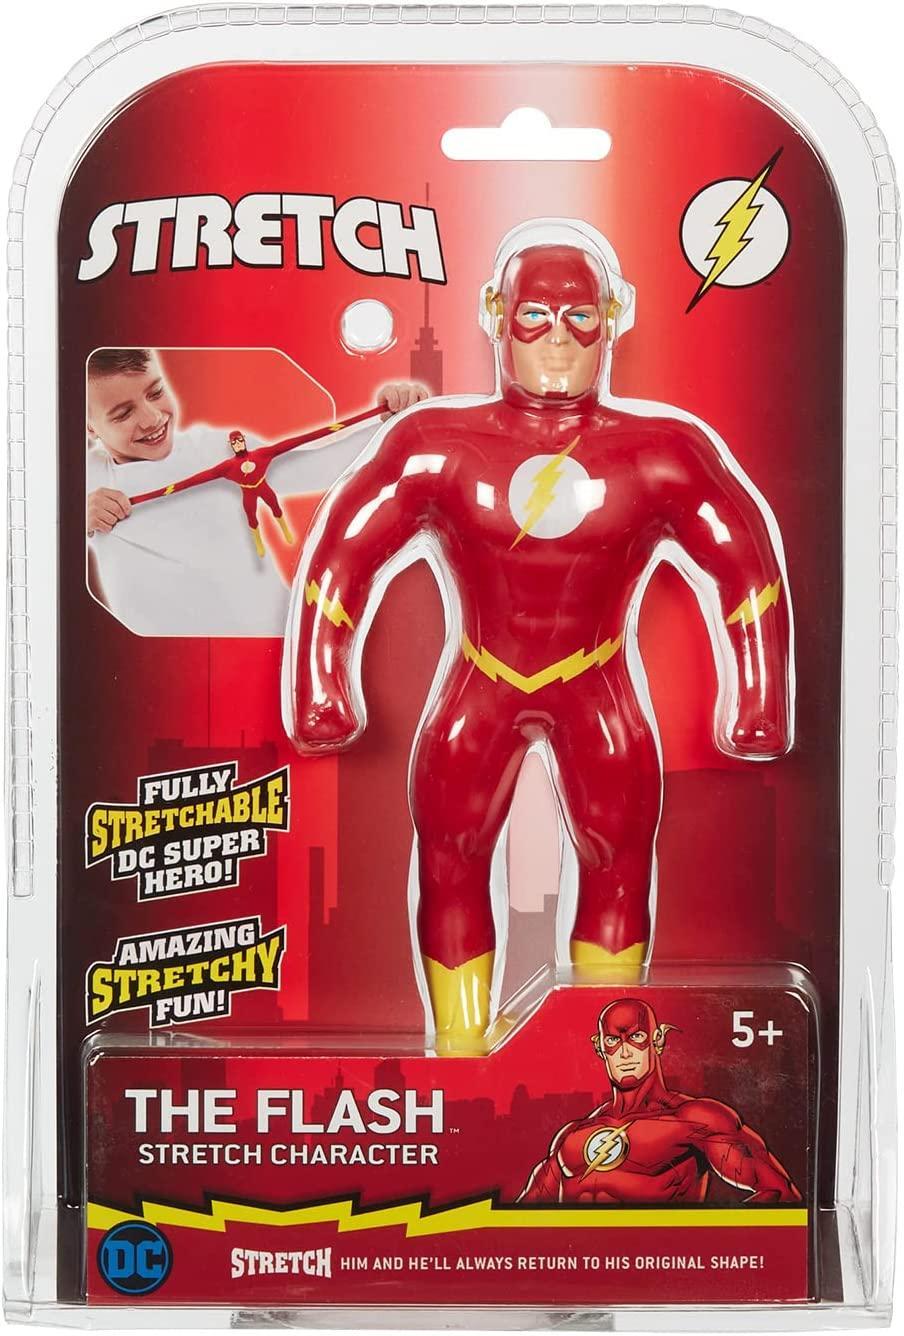 rocco giocattoli stretch the flash